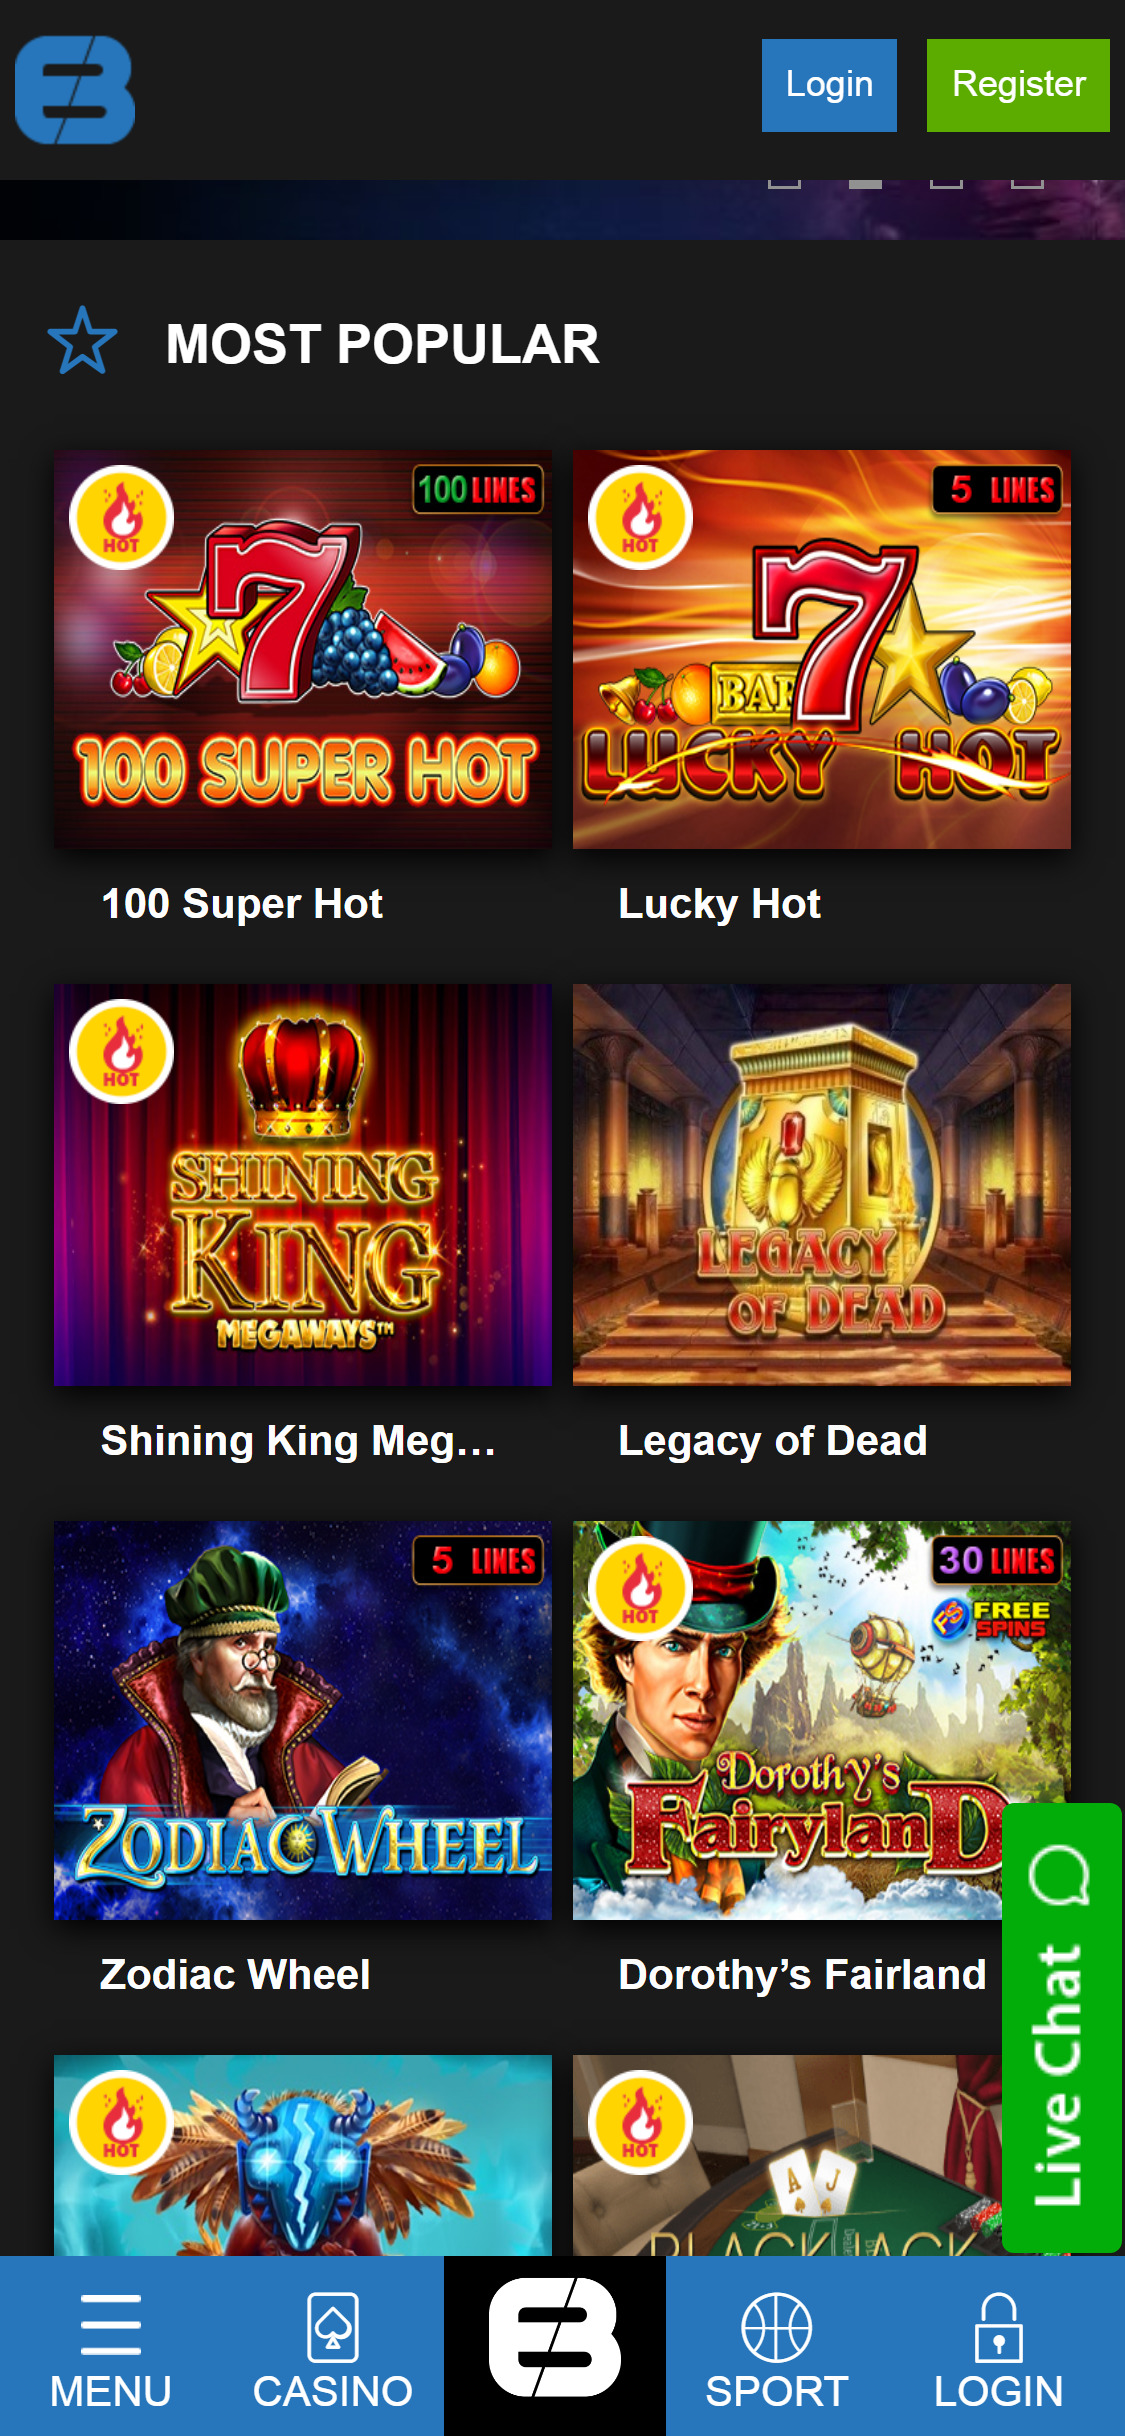 ExclusiveBet Casino Mobile Games Review